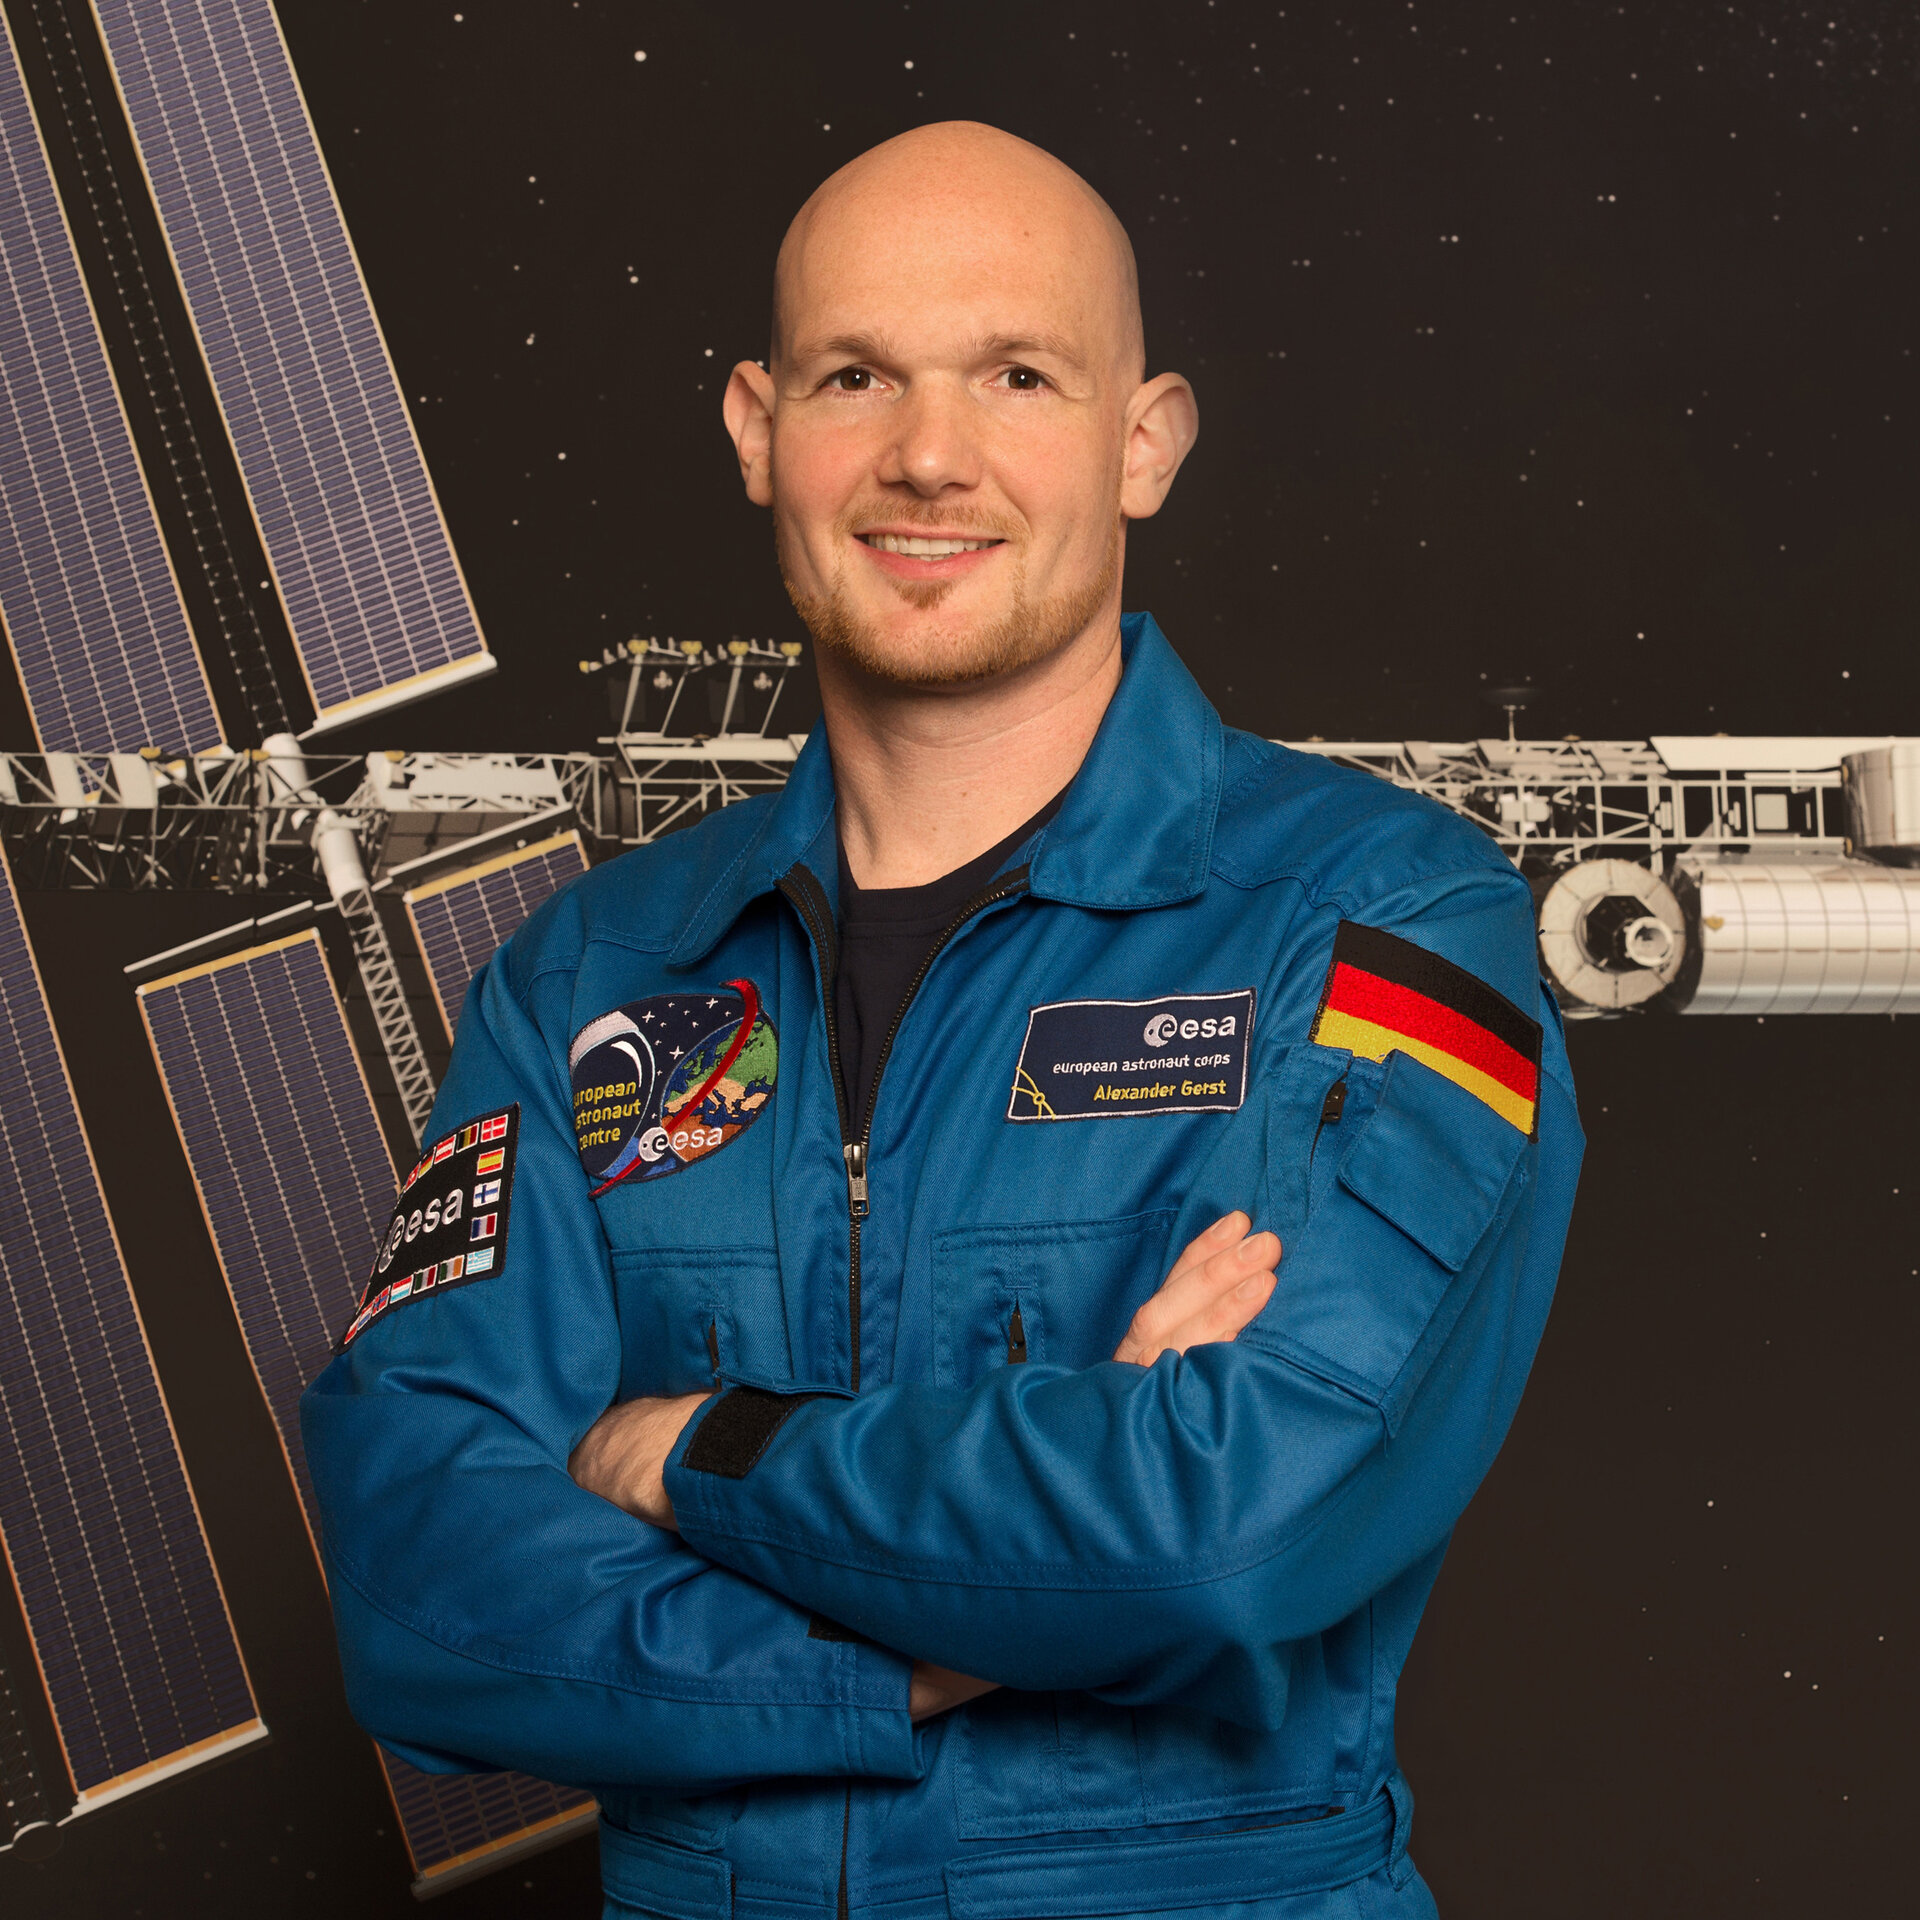 European Space Agency astronaut Alexander Gerst